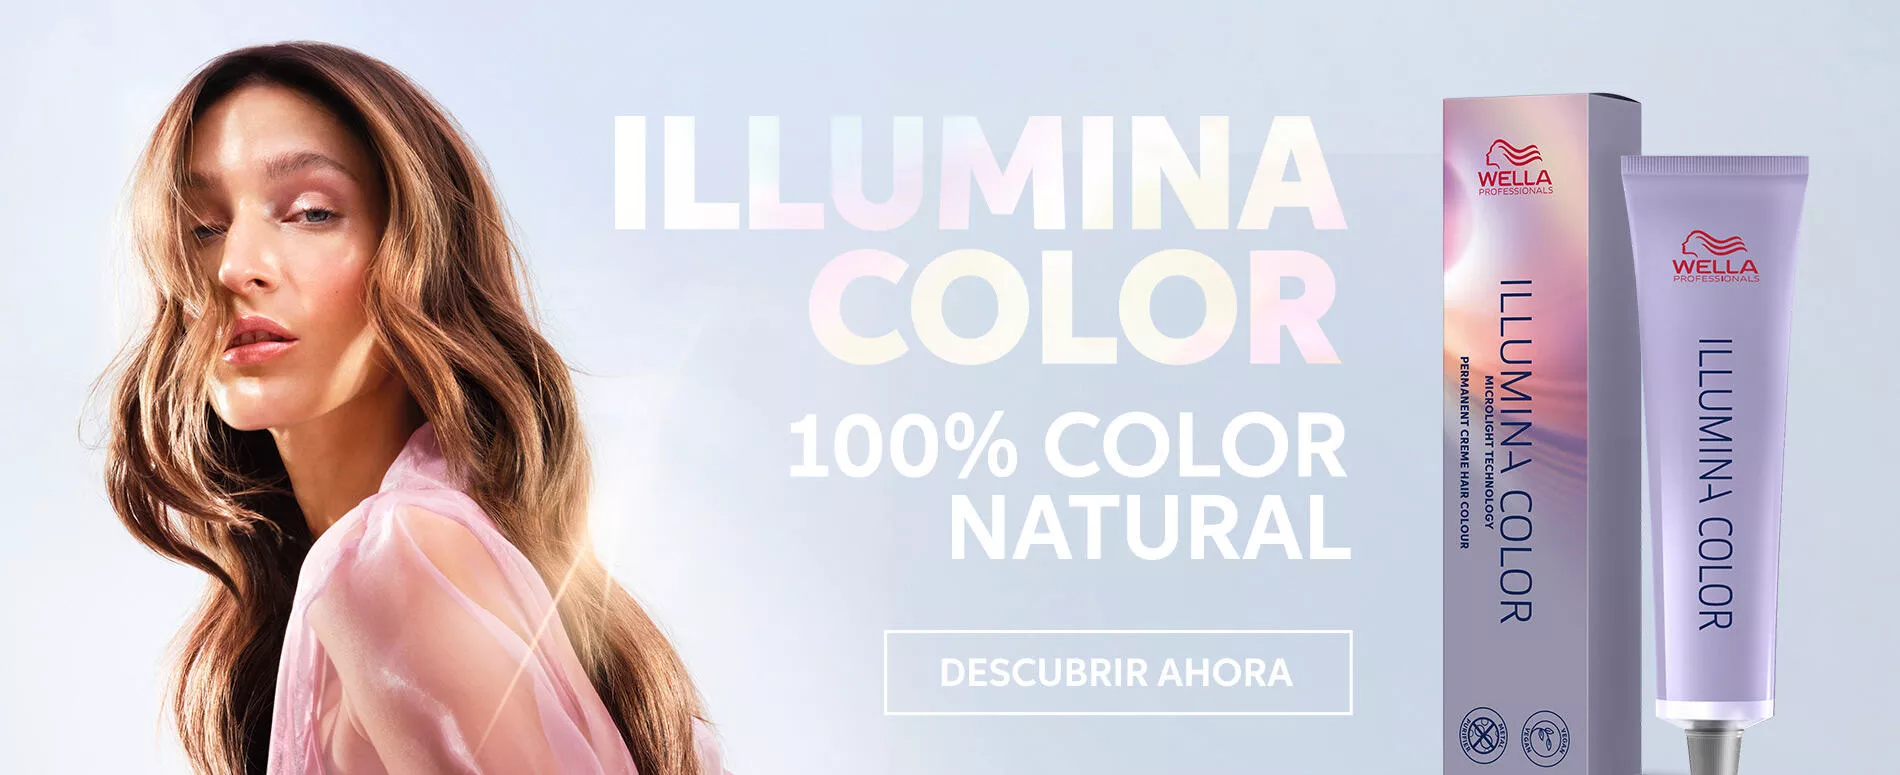 Una modelo de cabello castaño claro ondulado junto a imágenes del producto capilar 100% natural Illumina Color de Wella Professionals